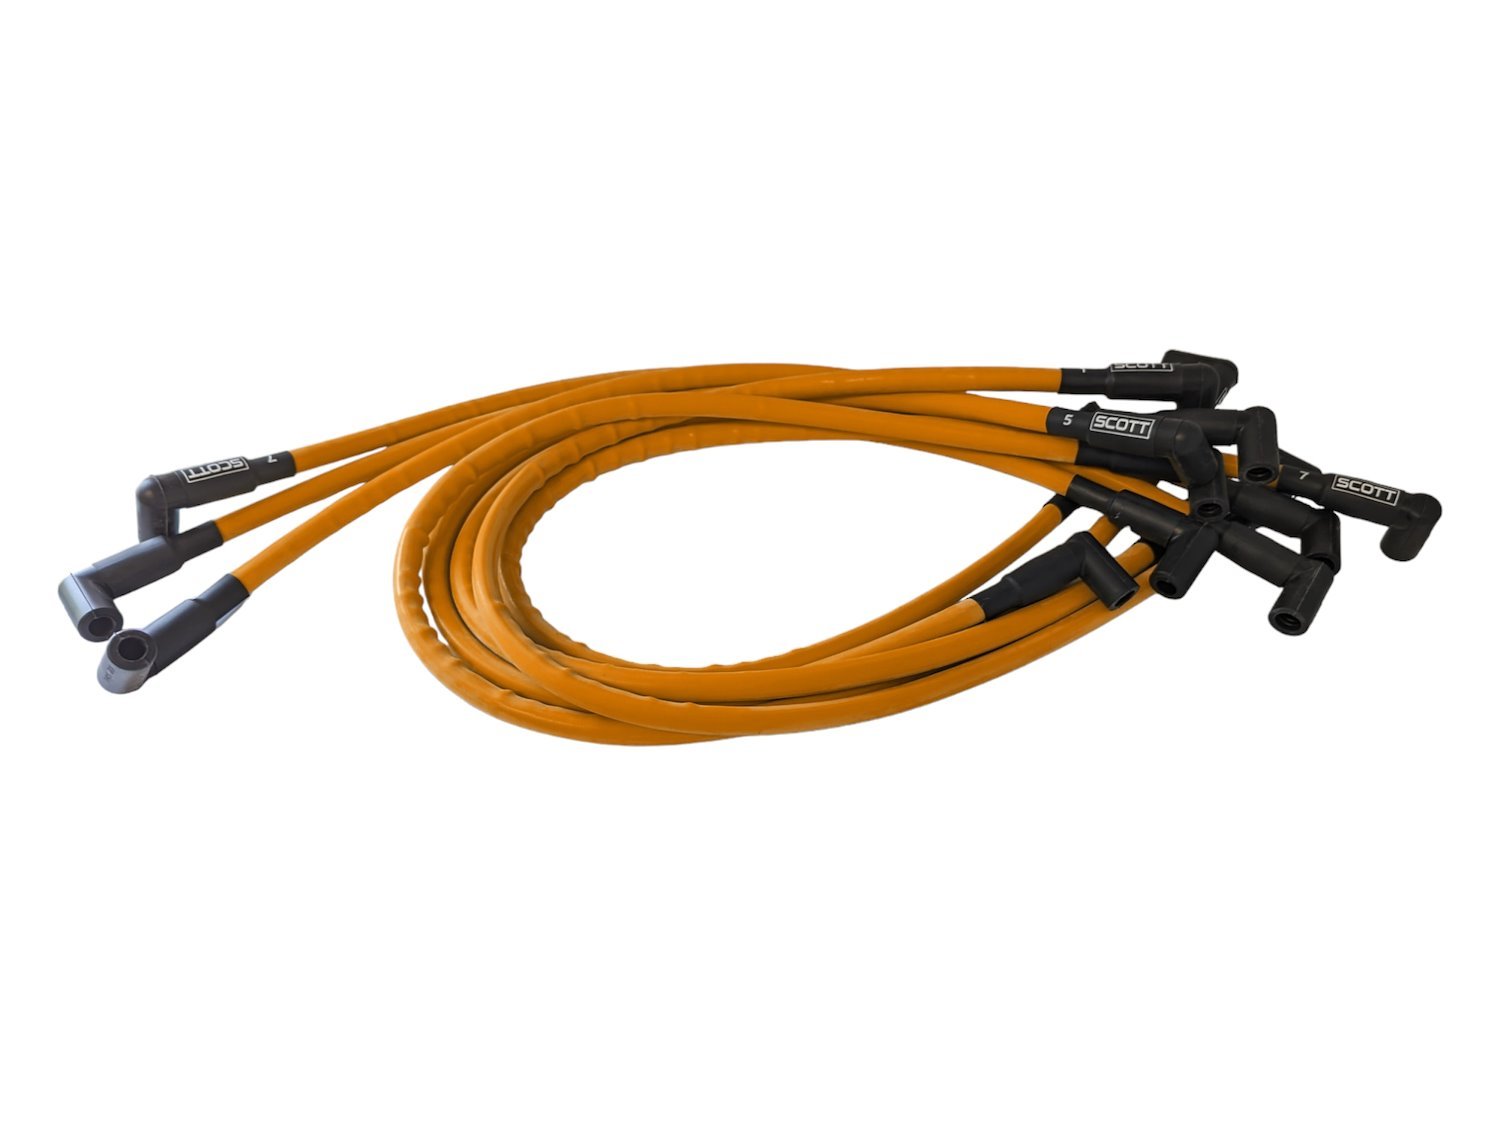 SPW-CH-416-5 High-Performance Silicone-Sleeved Spark Plug Wire Set for Big Block Chevy, Under Header [Orange]